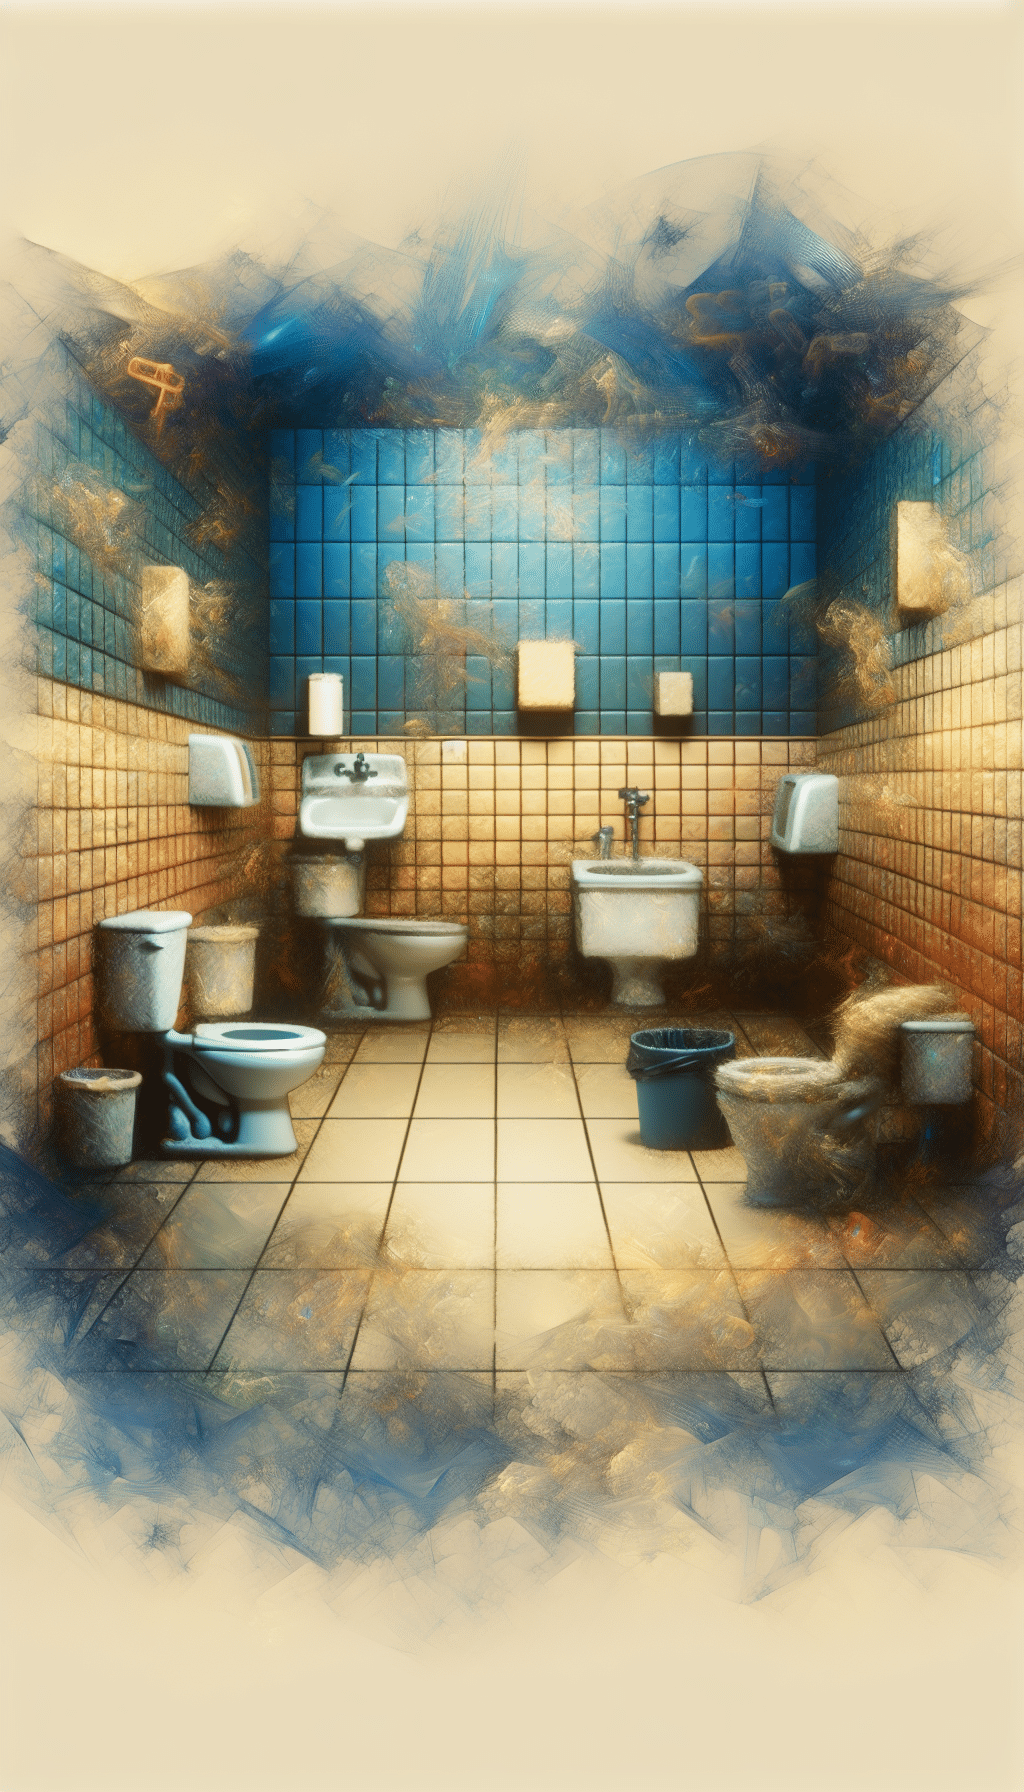 Decoding Dirty Public Bathroom Dreams